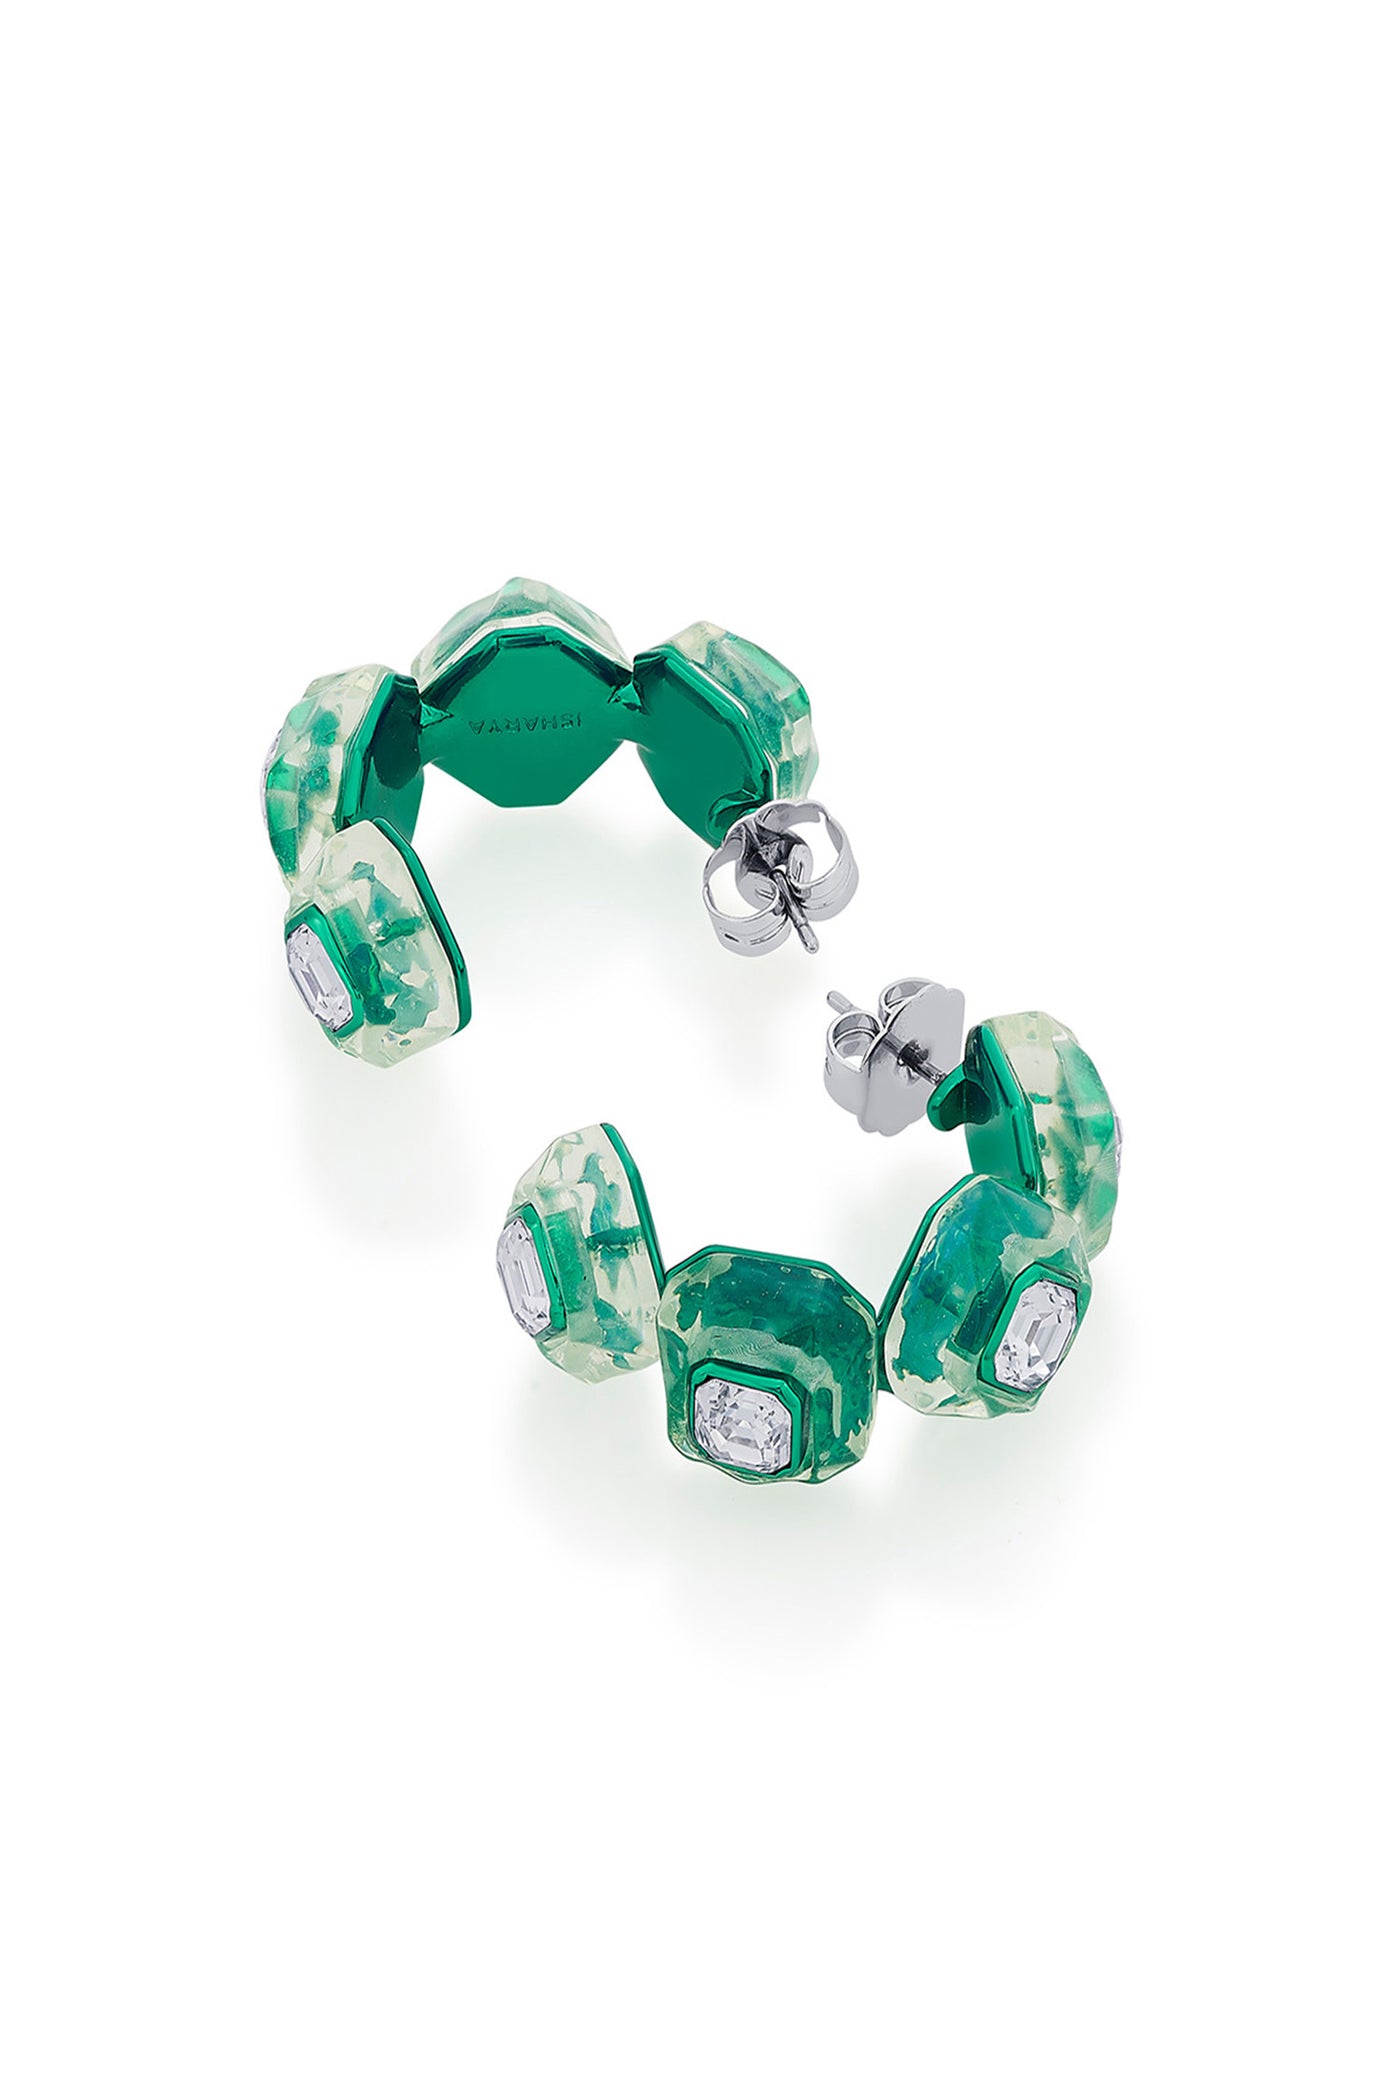 Isharya B-dazzle Infinity Cut Green Crystal Hoops In Colored Plating fashion jewellery online shopping melange singapore indian designer wear